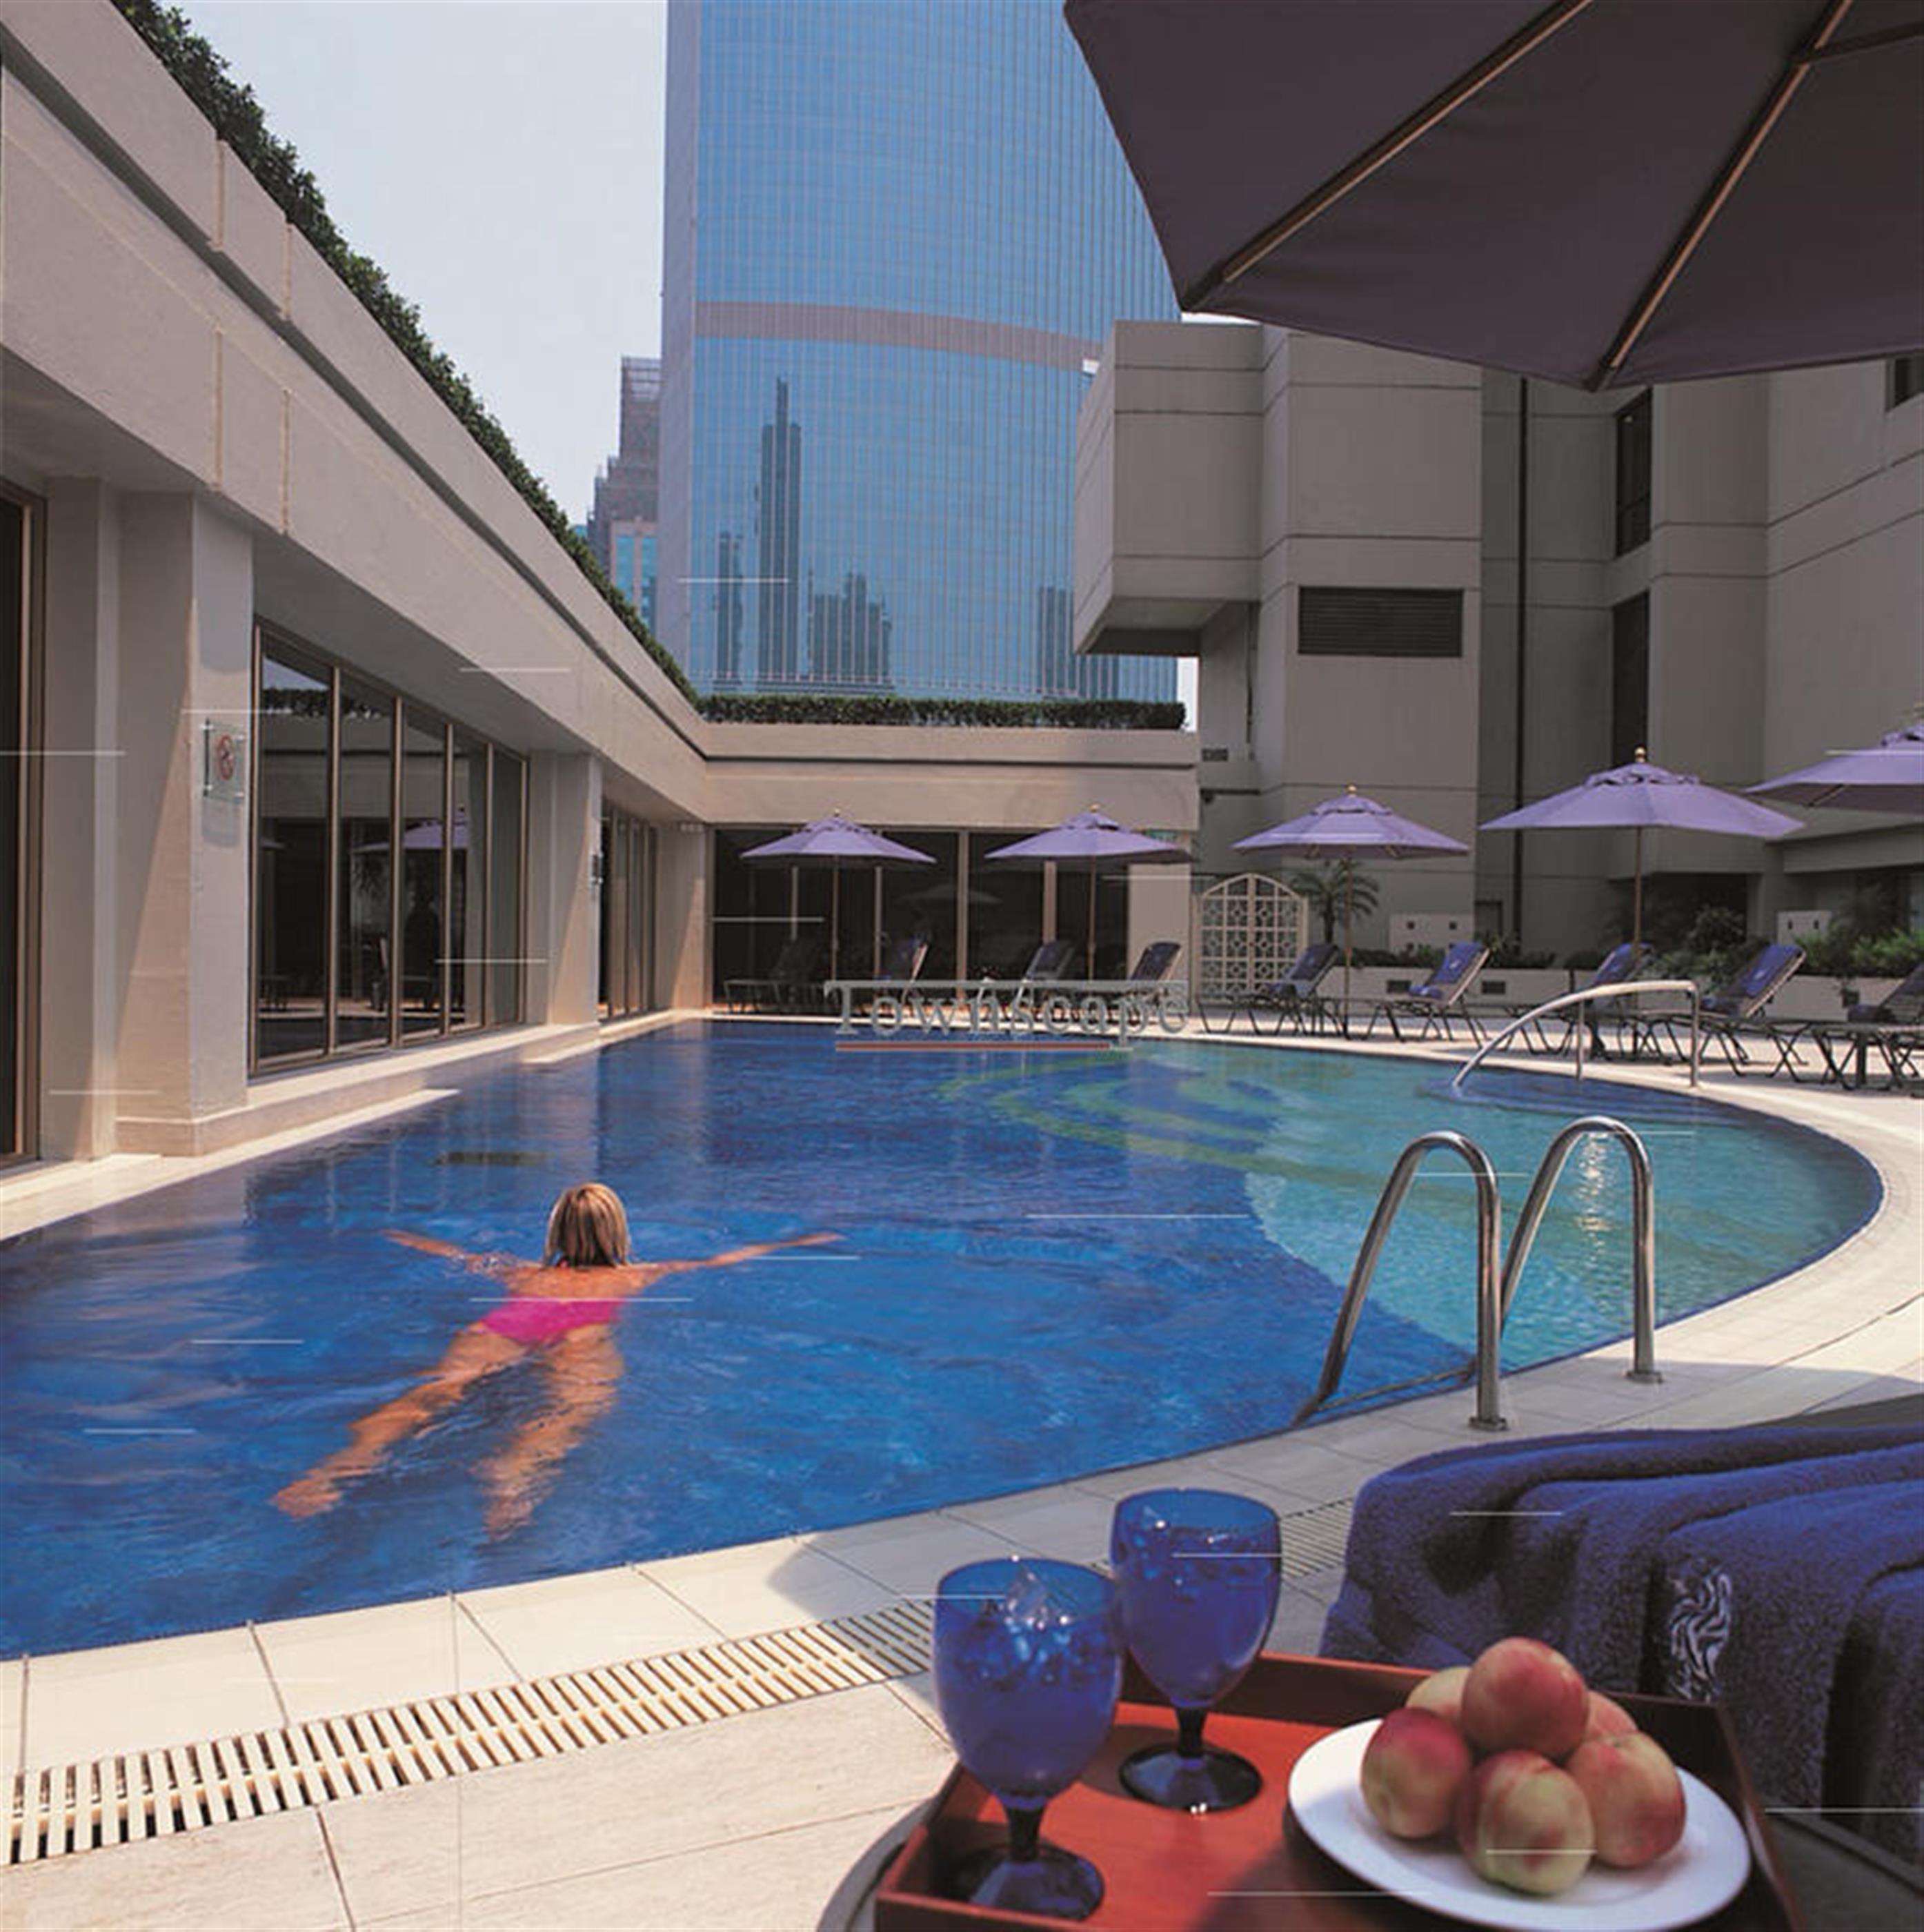 Luxury deluxe. Портман гостиница. The Portman Ritz Carlton Shanghai, Шанхай, Китай ресепшн. Shanghai Central Hotel 4. Luxury Shanghai Hotel.